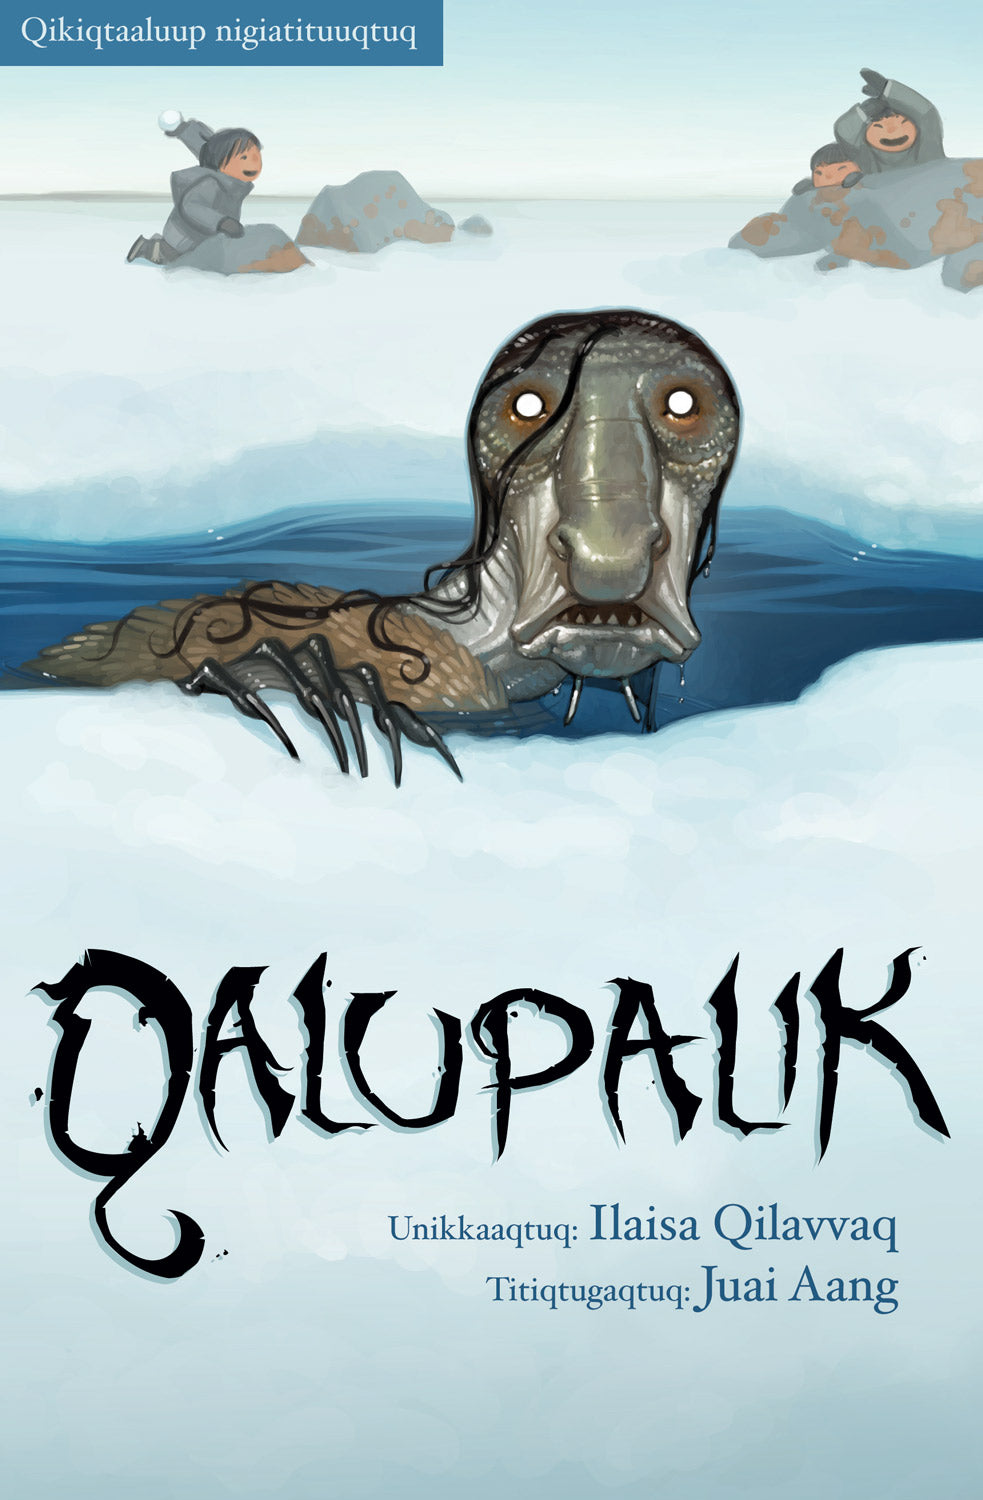 The Qalupalik